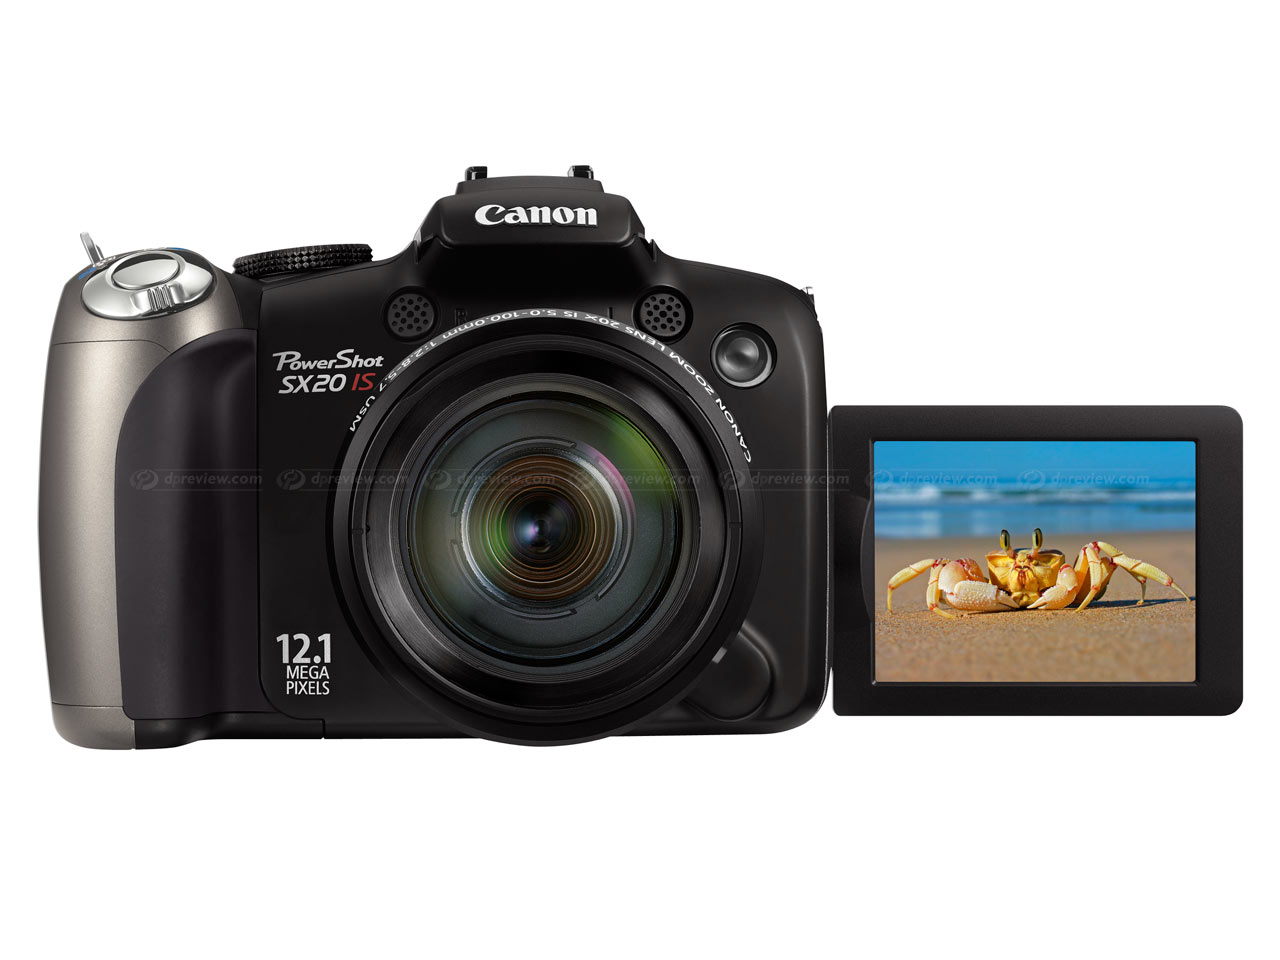 Canon PowerShot SX20 IS super-zoom